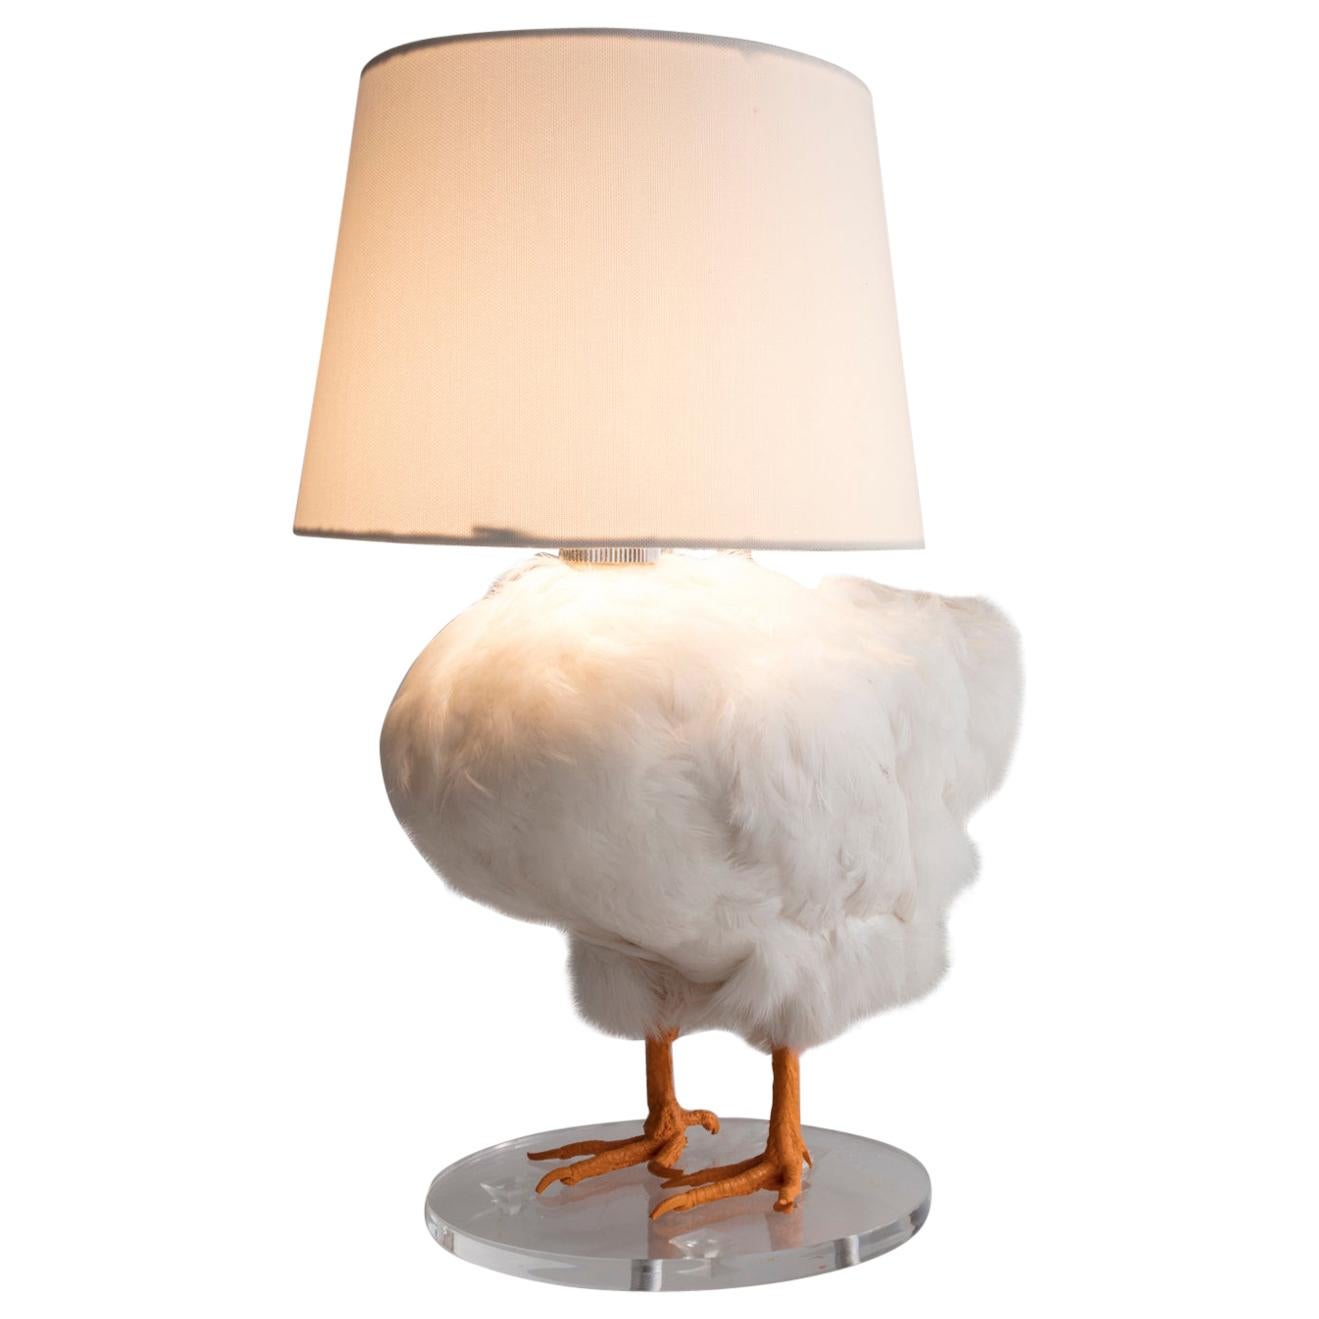 "Chicken Lamp" by Sebastian Errazuriz